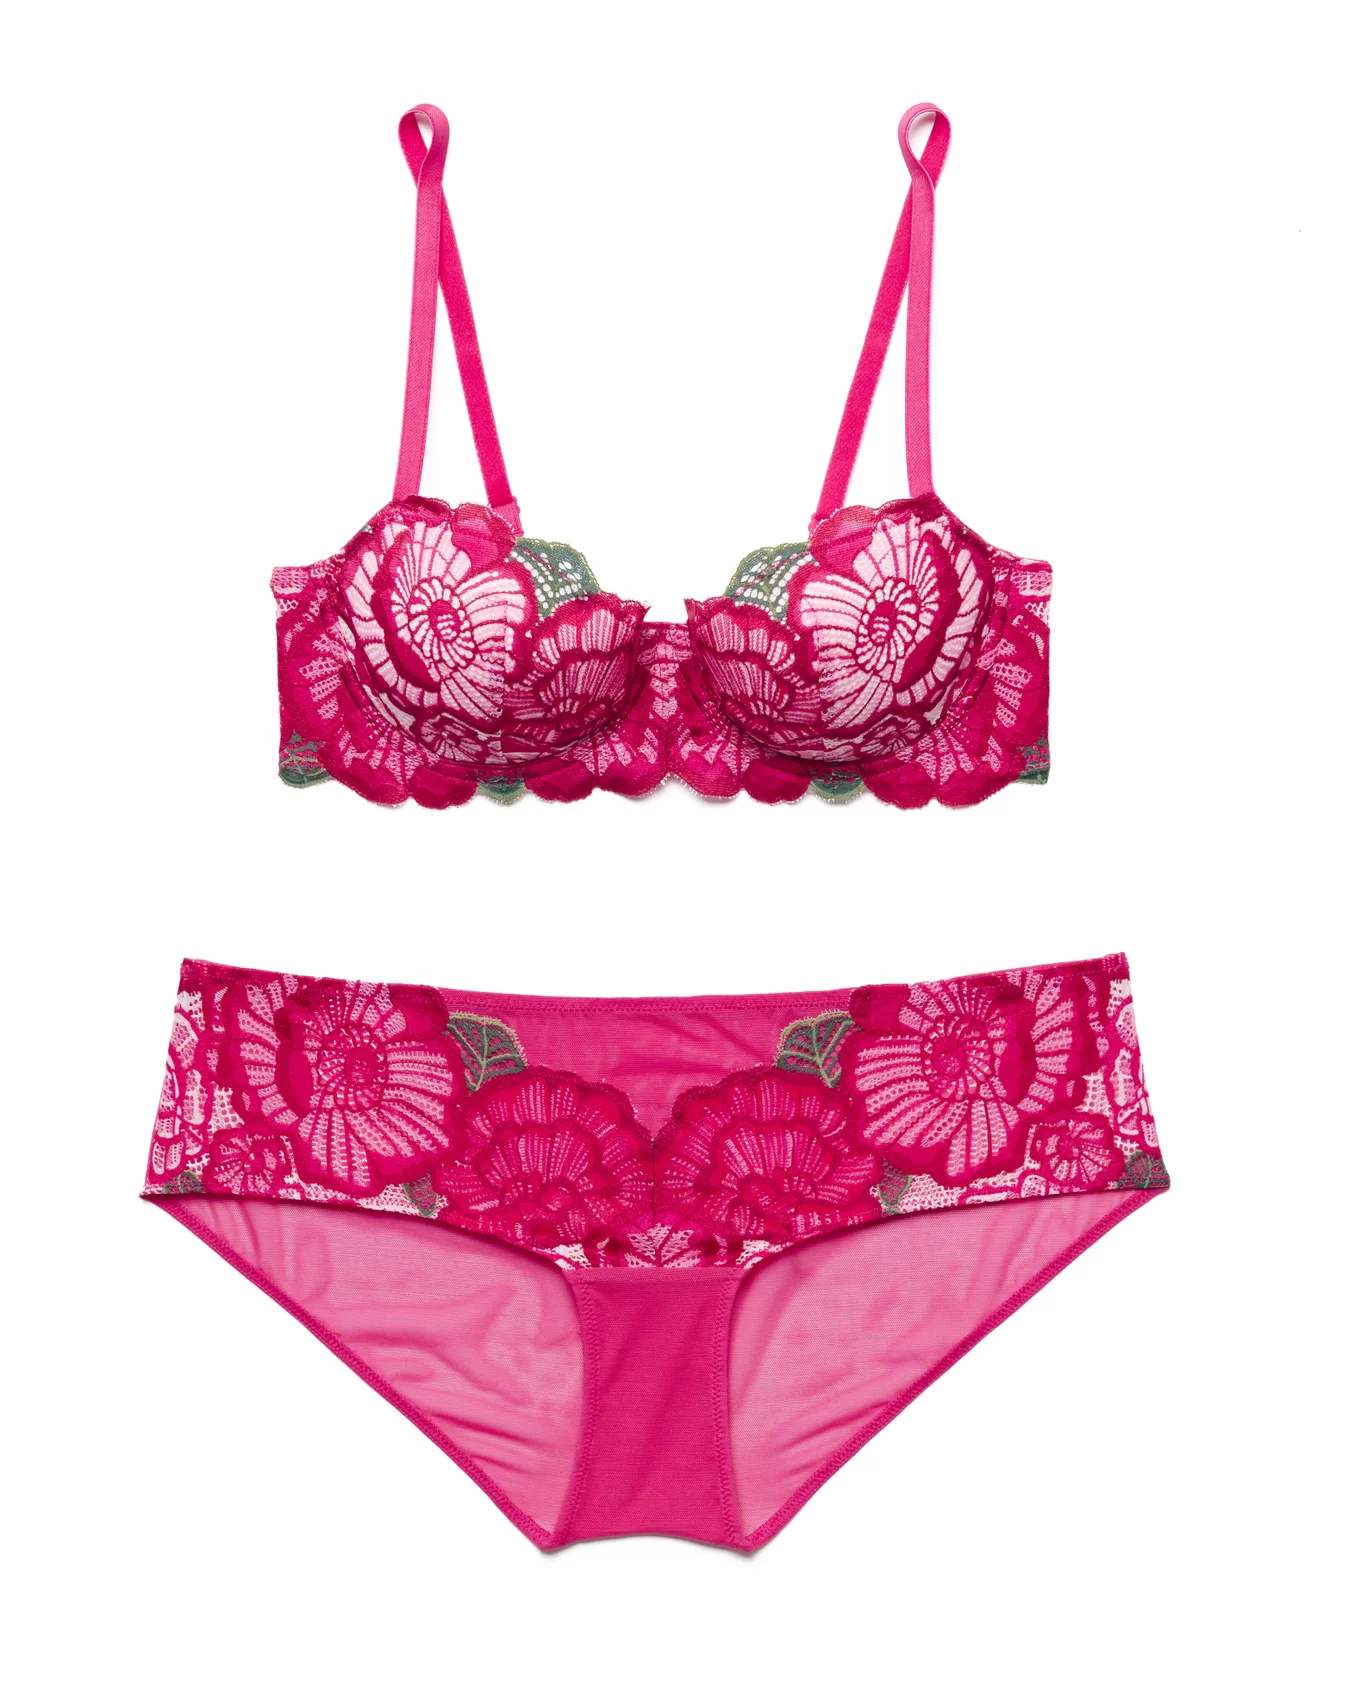 Adore Me Women's Colete Balconette Bra 42dd / Printed Lace C05 Pink. :  Target